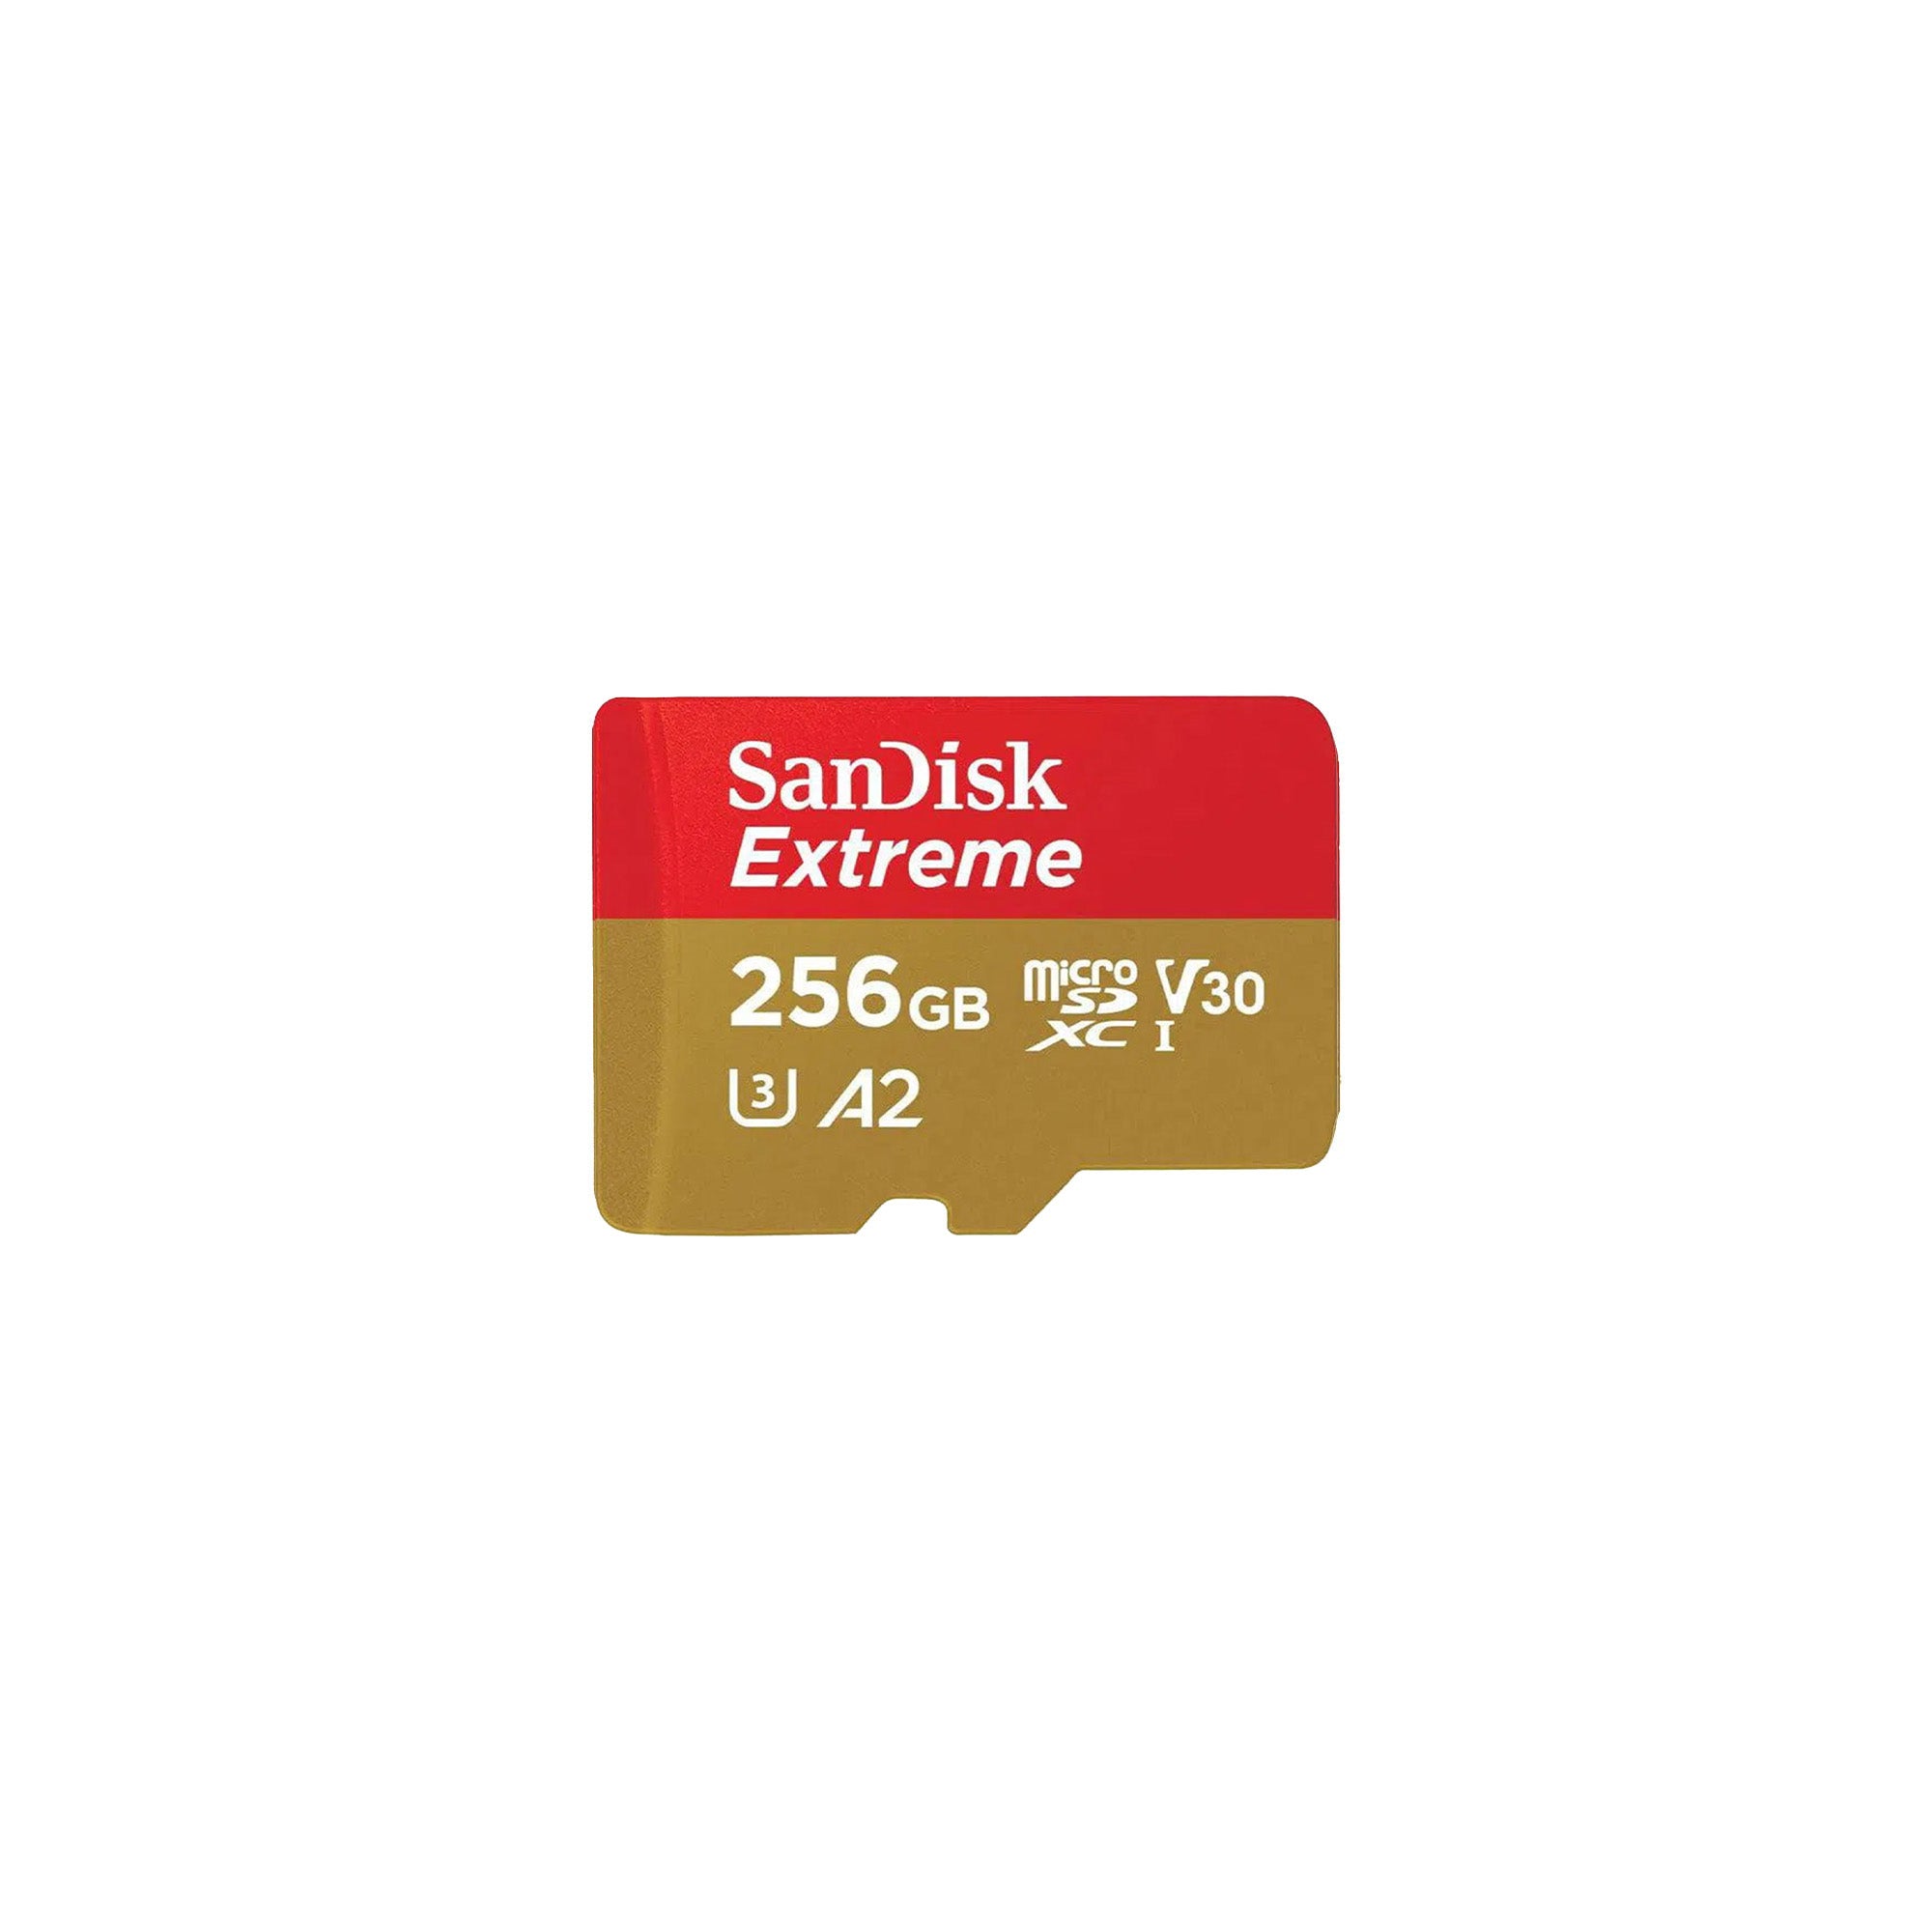 SanDisk Extreme 256GB microSDXC Memory Card - 10 Years Warranty